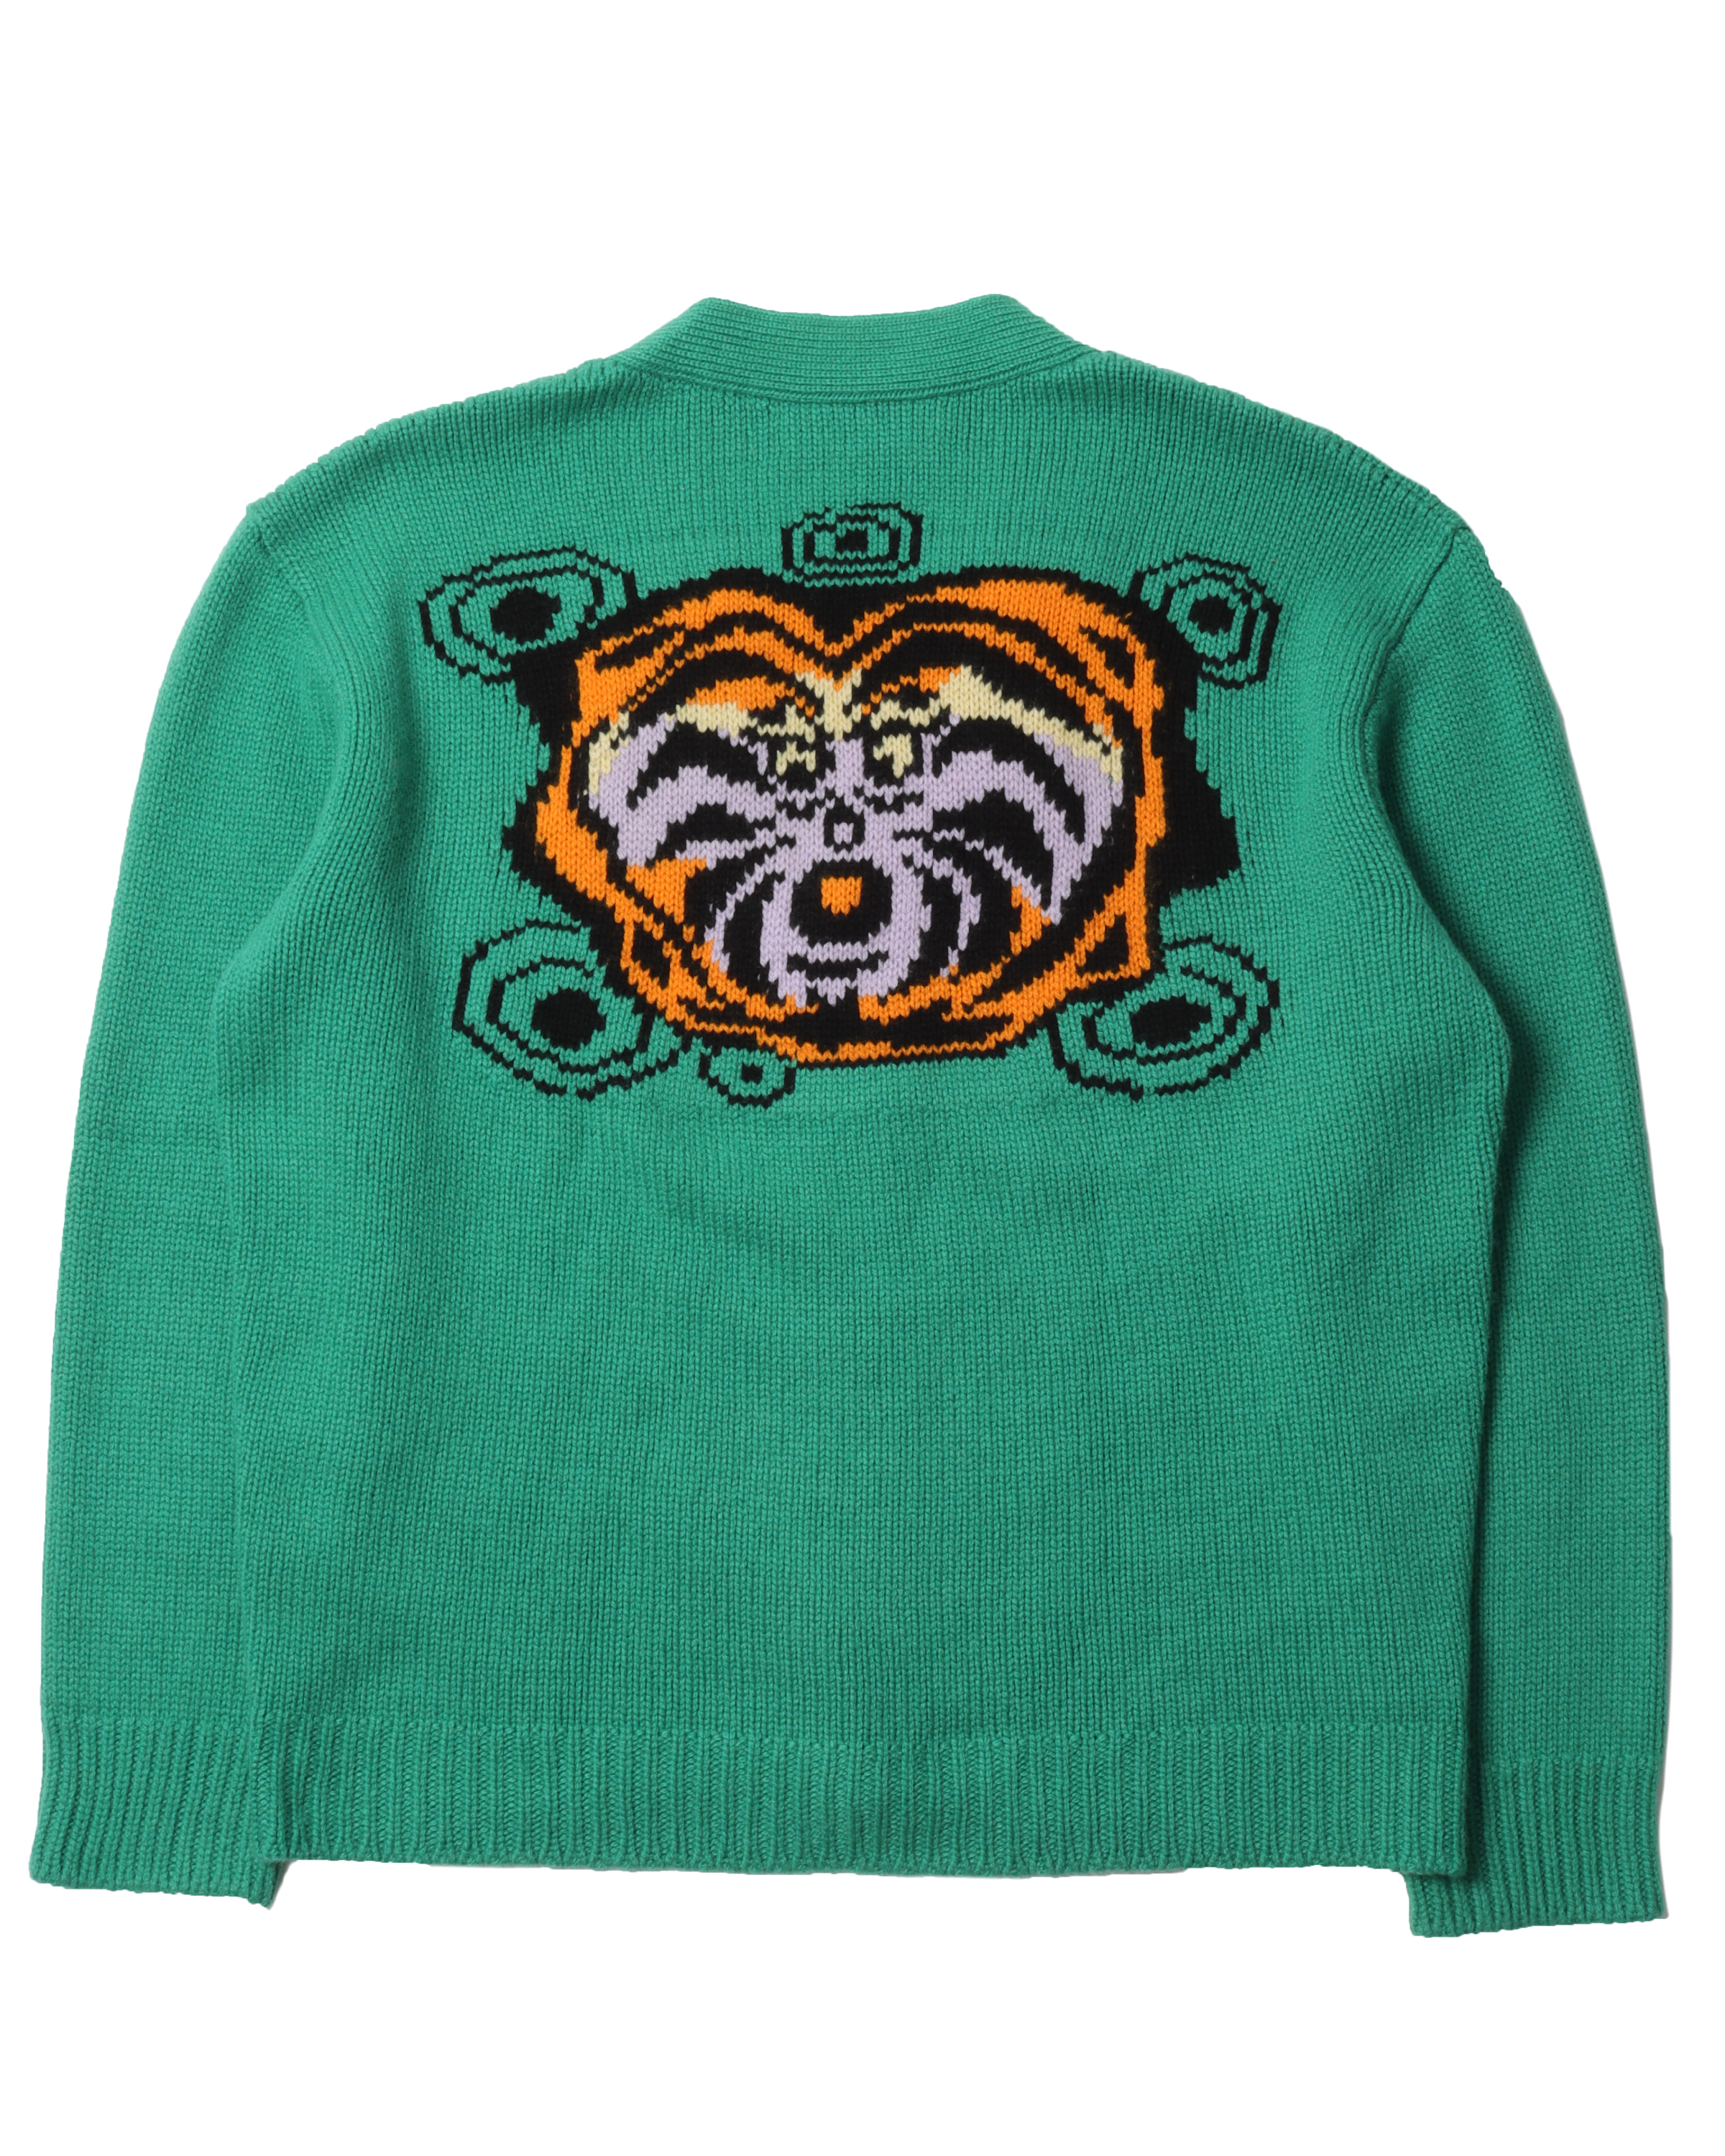 Tiger Swirl cashmere cardigan